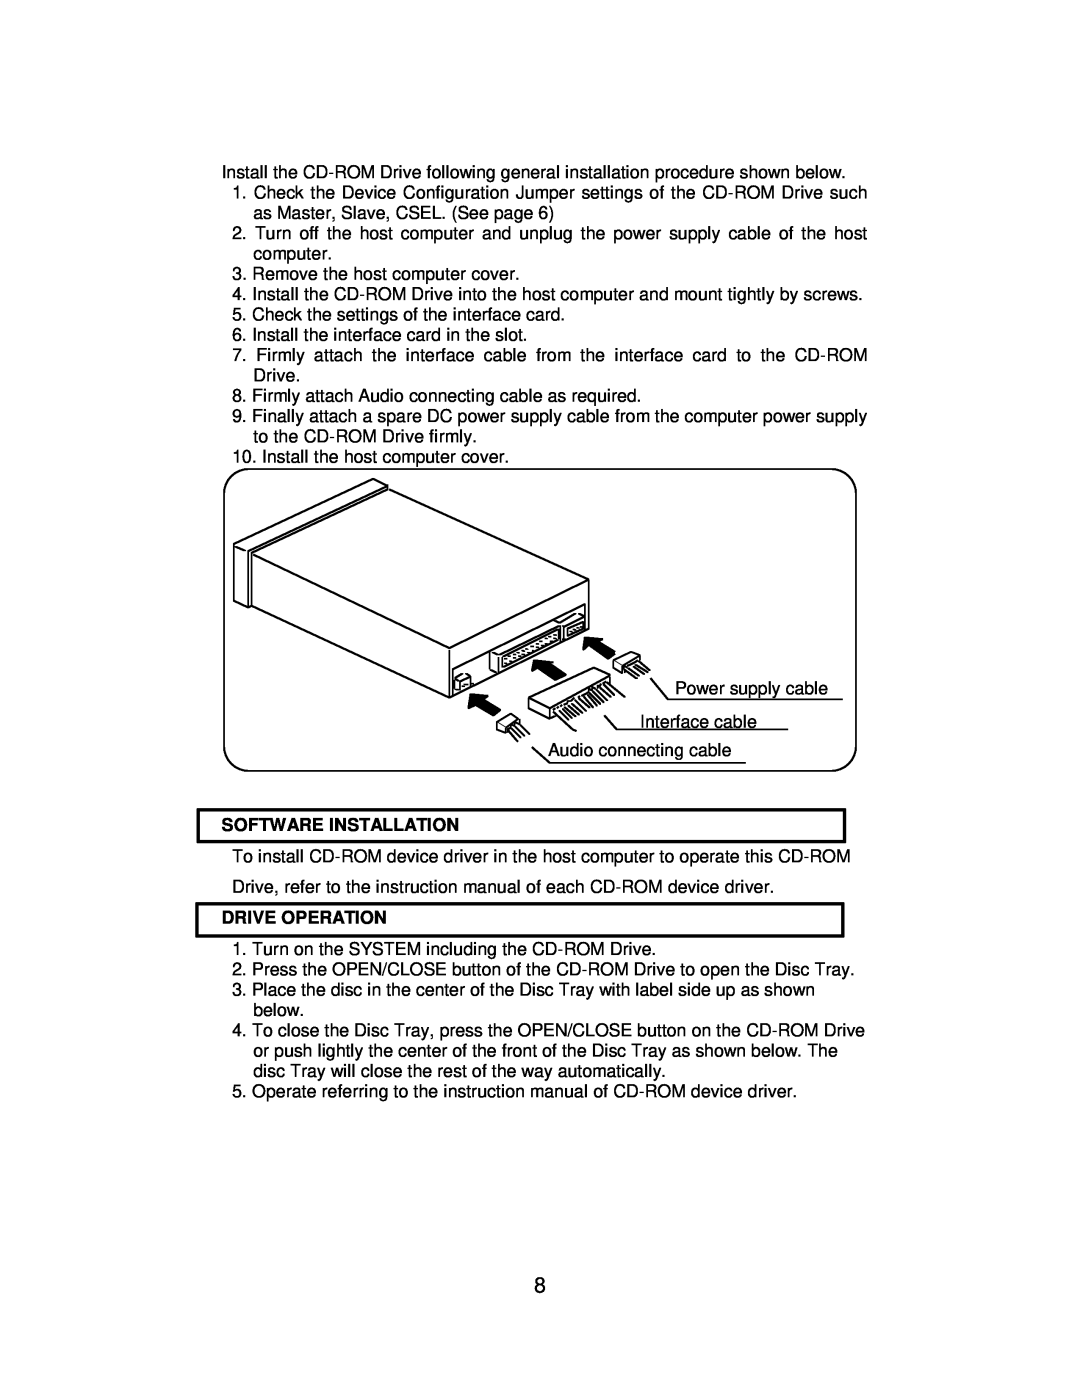 Hitachi CDR-8130 instruction manual Software Installation, Drive Operation 